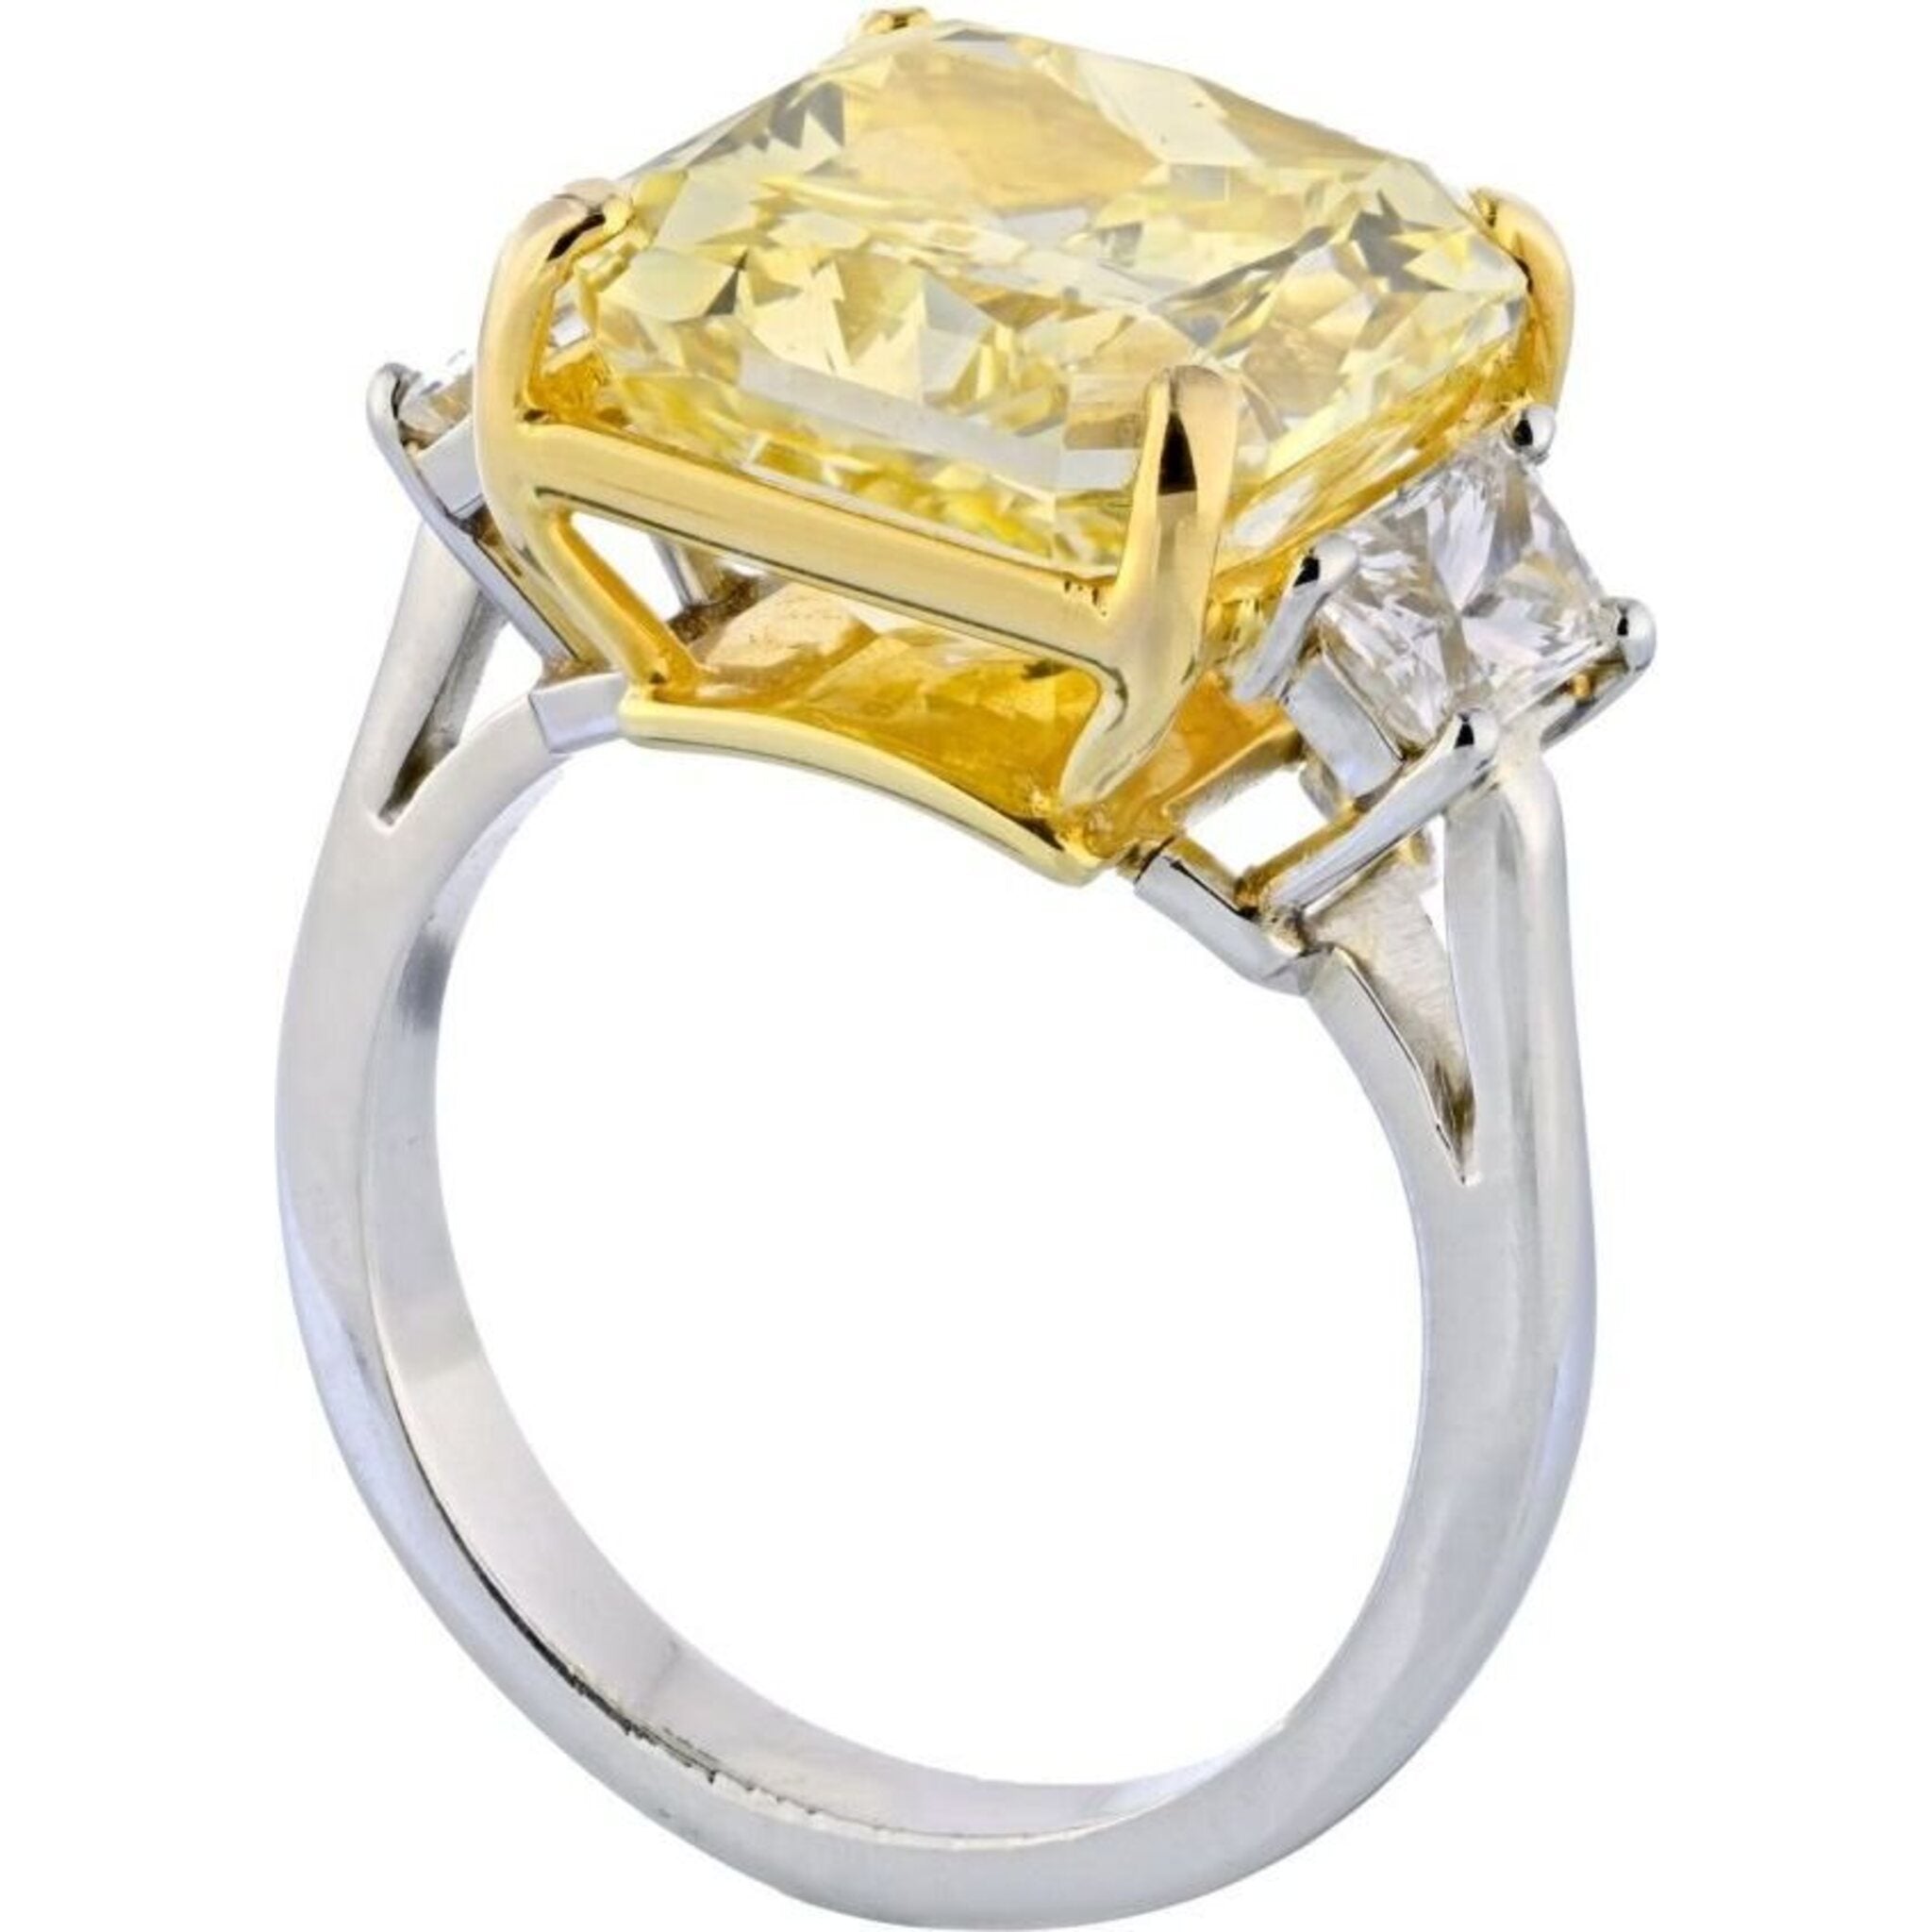 10 carat radiant cut diamond fancy intense yellow gia three stone engagement ring rings a45654 3 b841e0b4 b3e8 4ed6 b5e0 1a2a6f816e2c